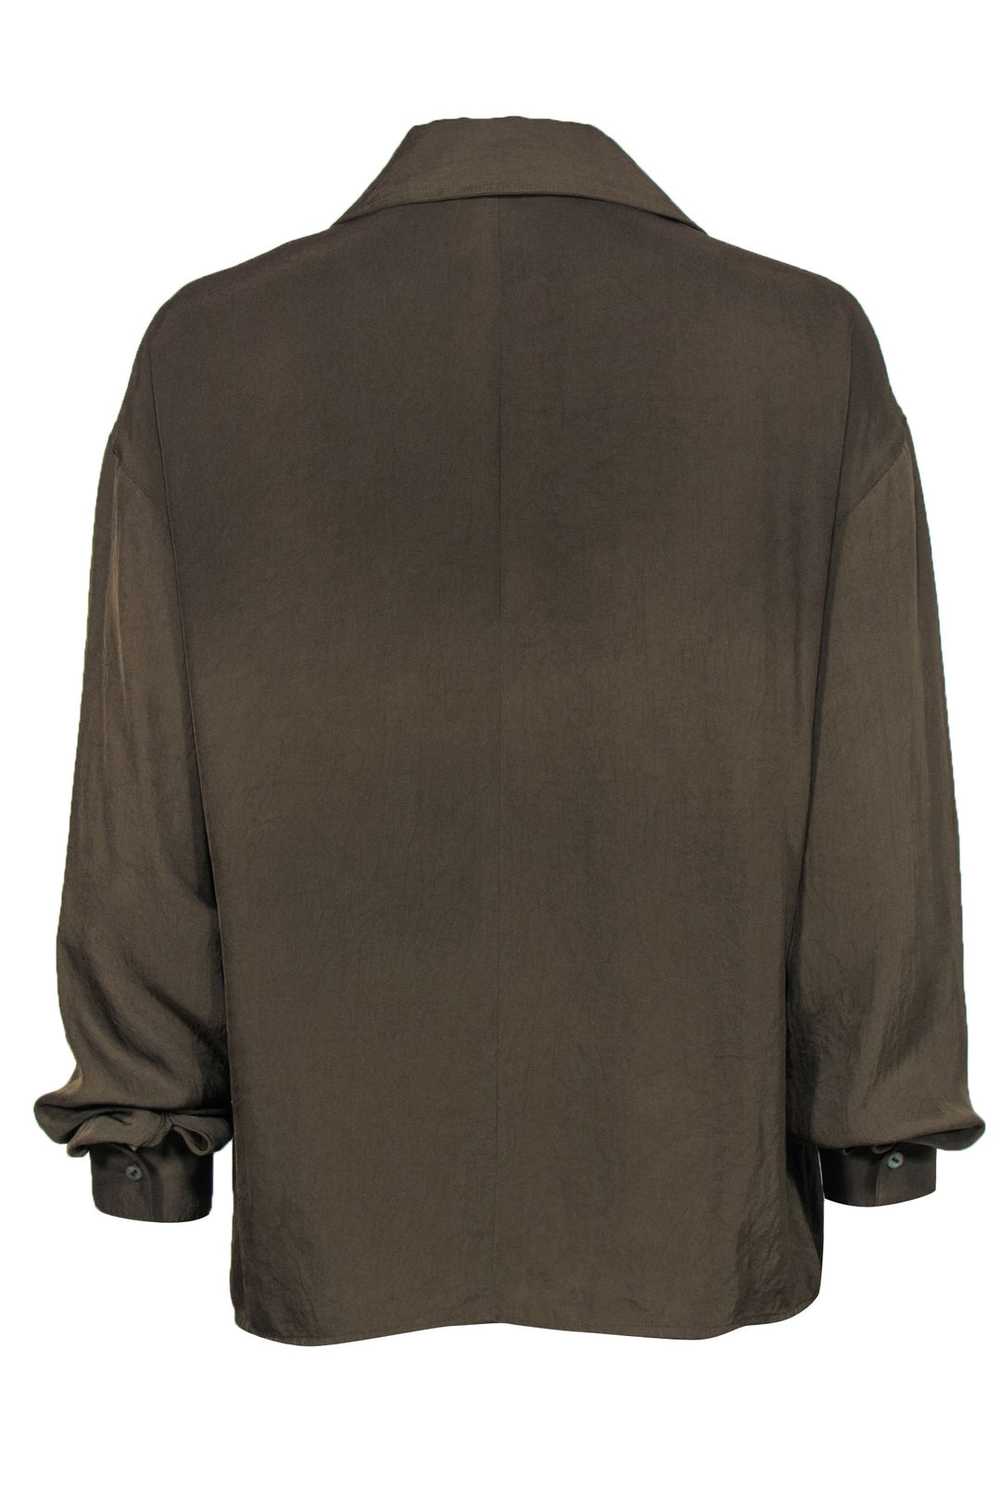 Vince - Olive Long Sleeve Button-Up Blouse Sz M - image 3